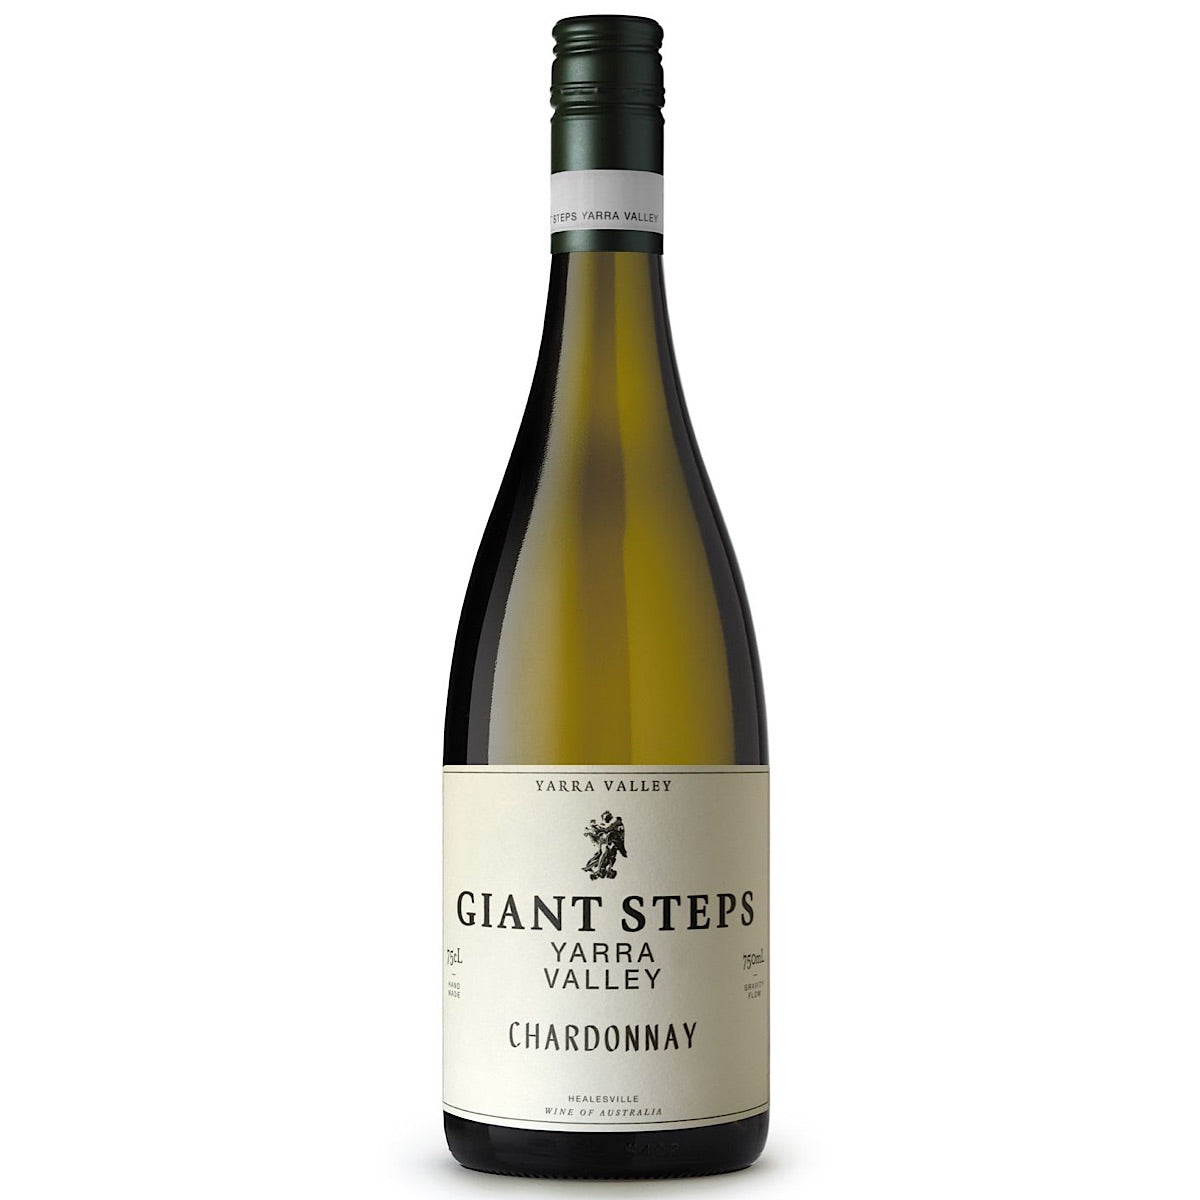 Giant Steps Yarra Valley Chardonnay 6 Bottle Case.